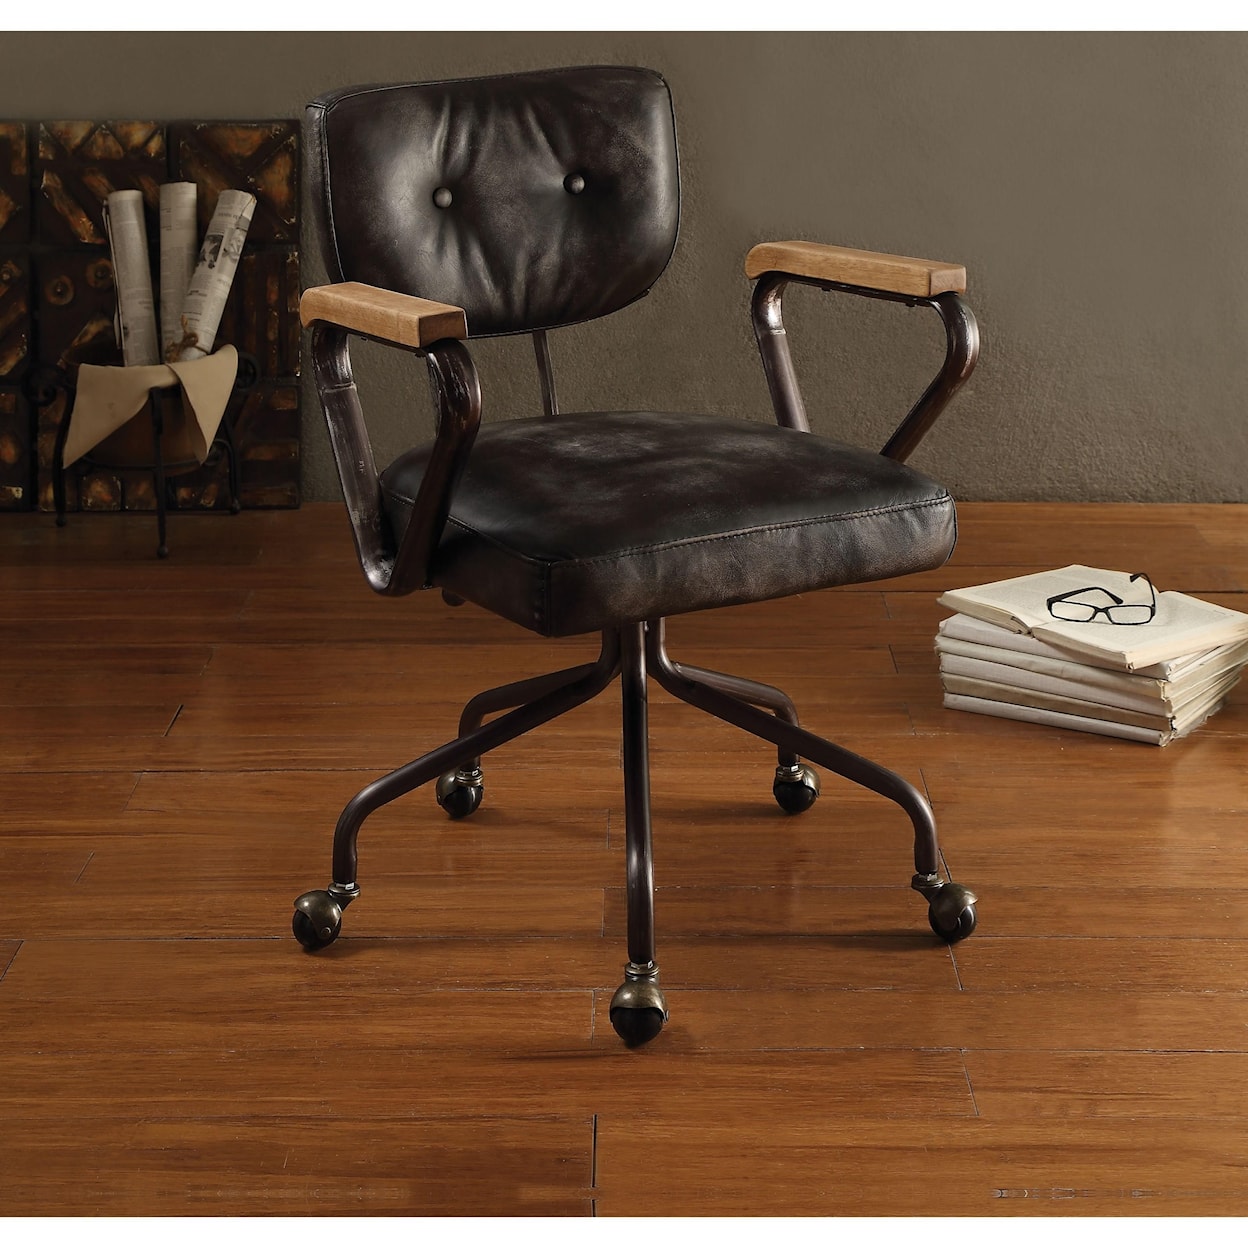 Acme Furniture Hallie Office Chair